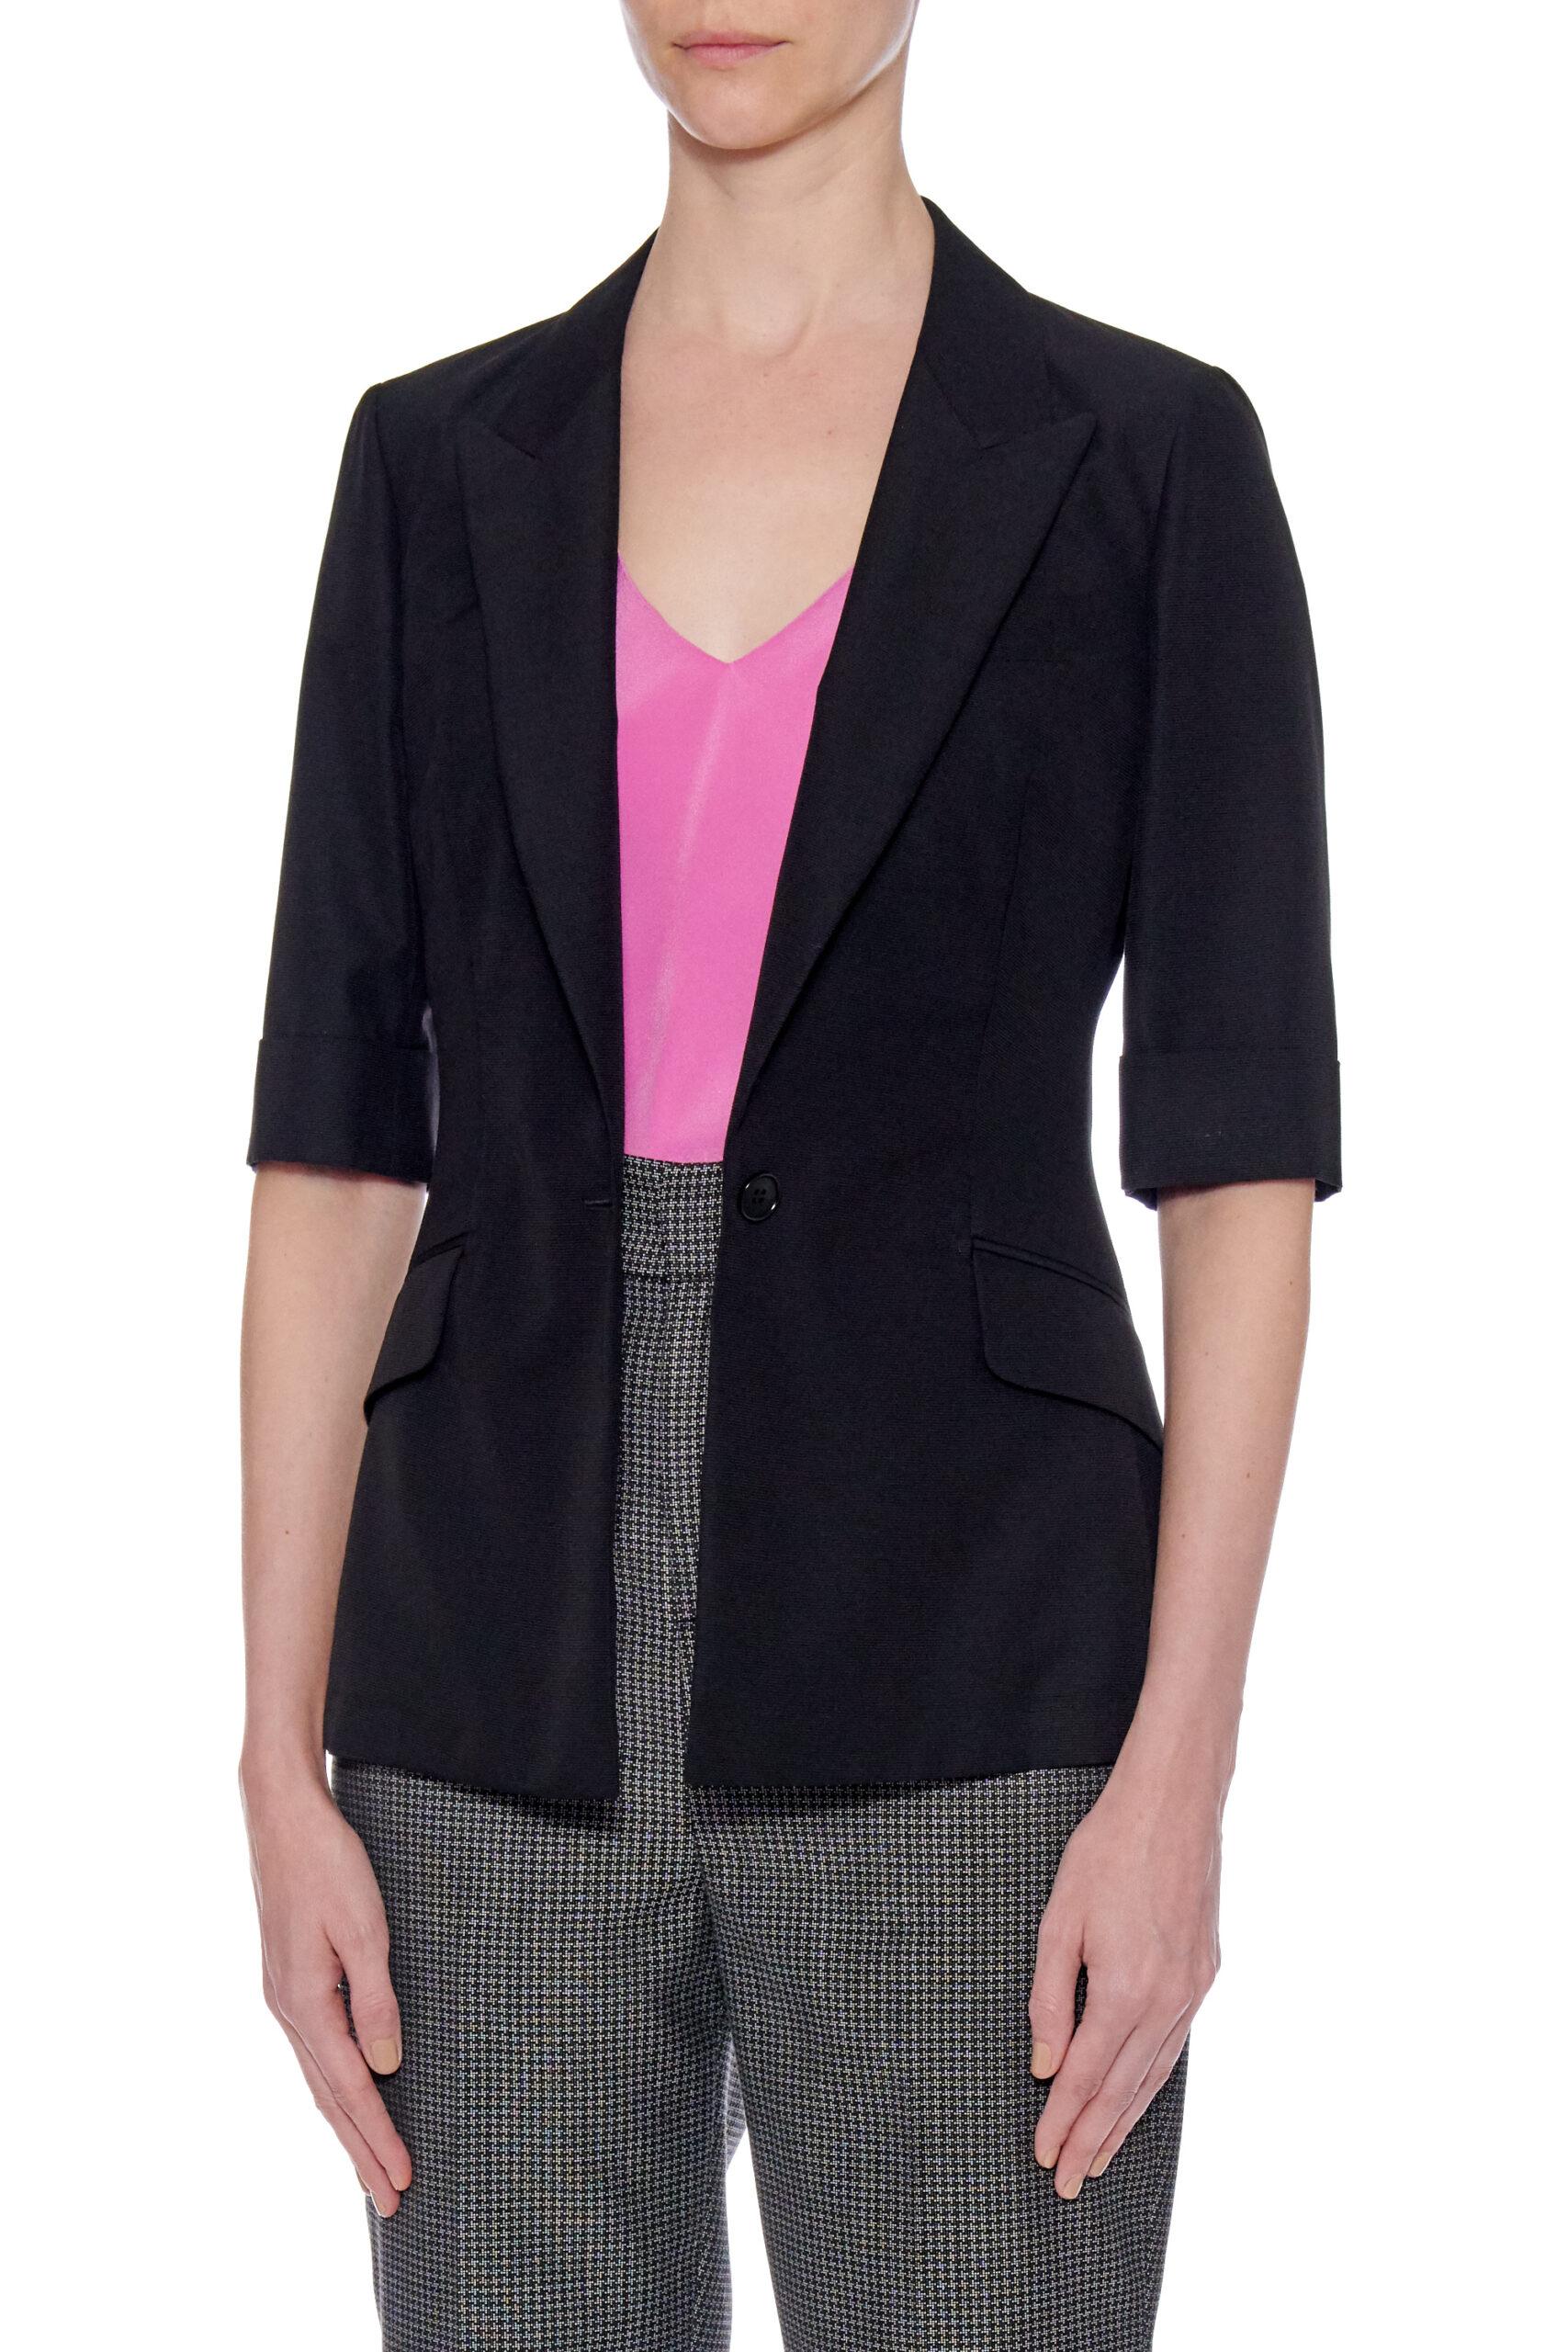 Huelva Jacket – Short sleeve, single-breasted summer jacket in black0